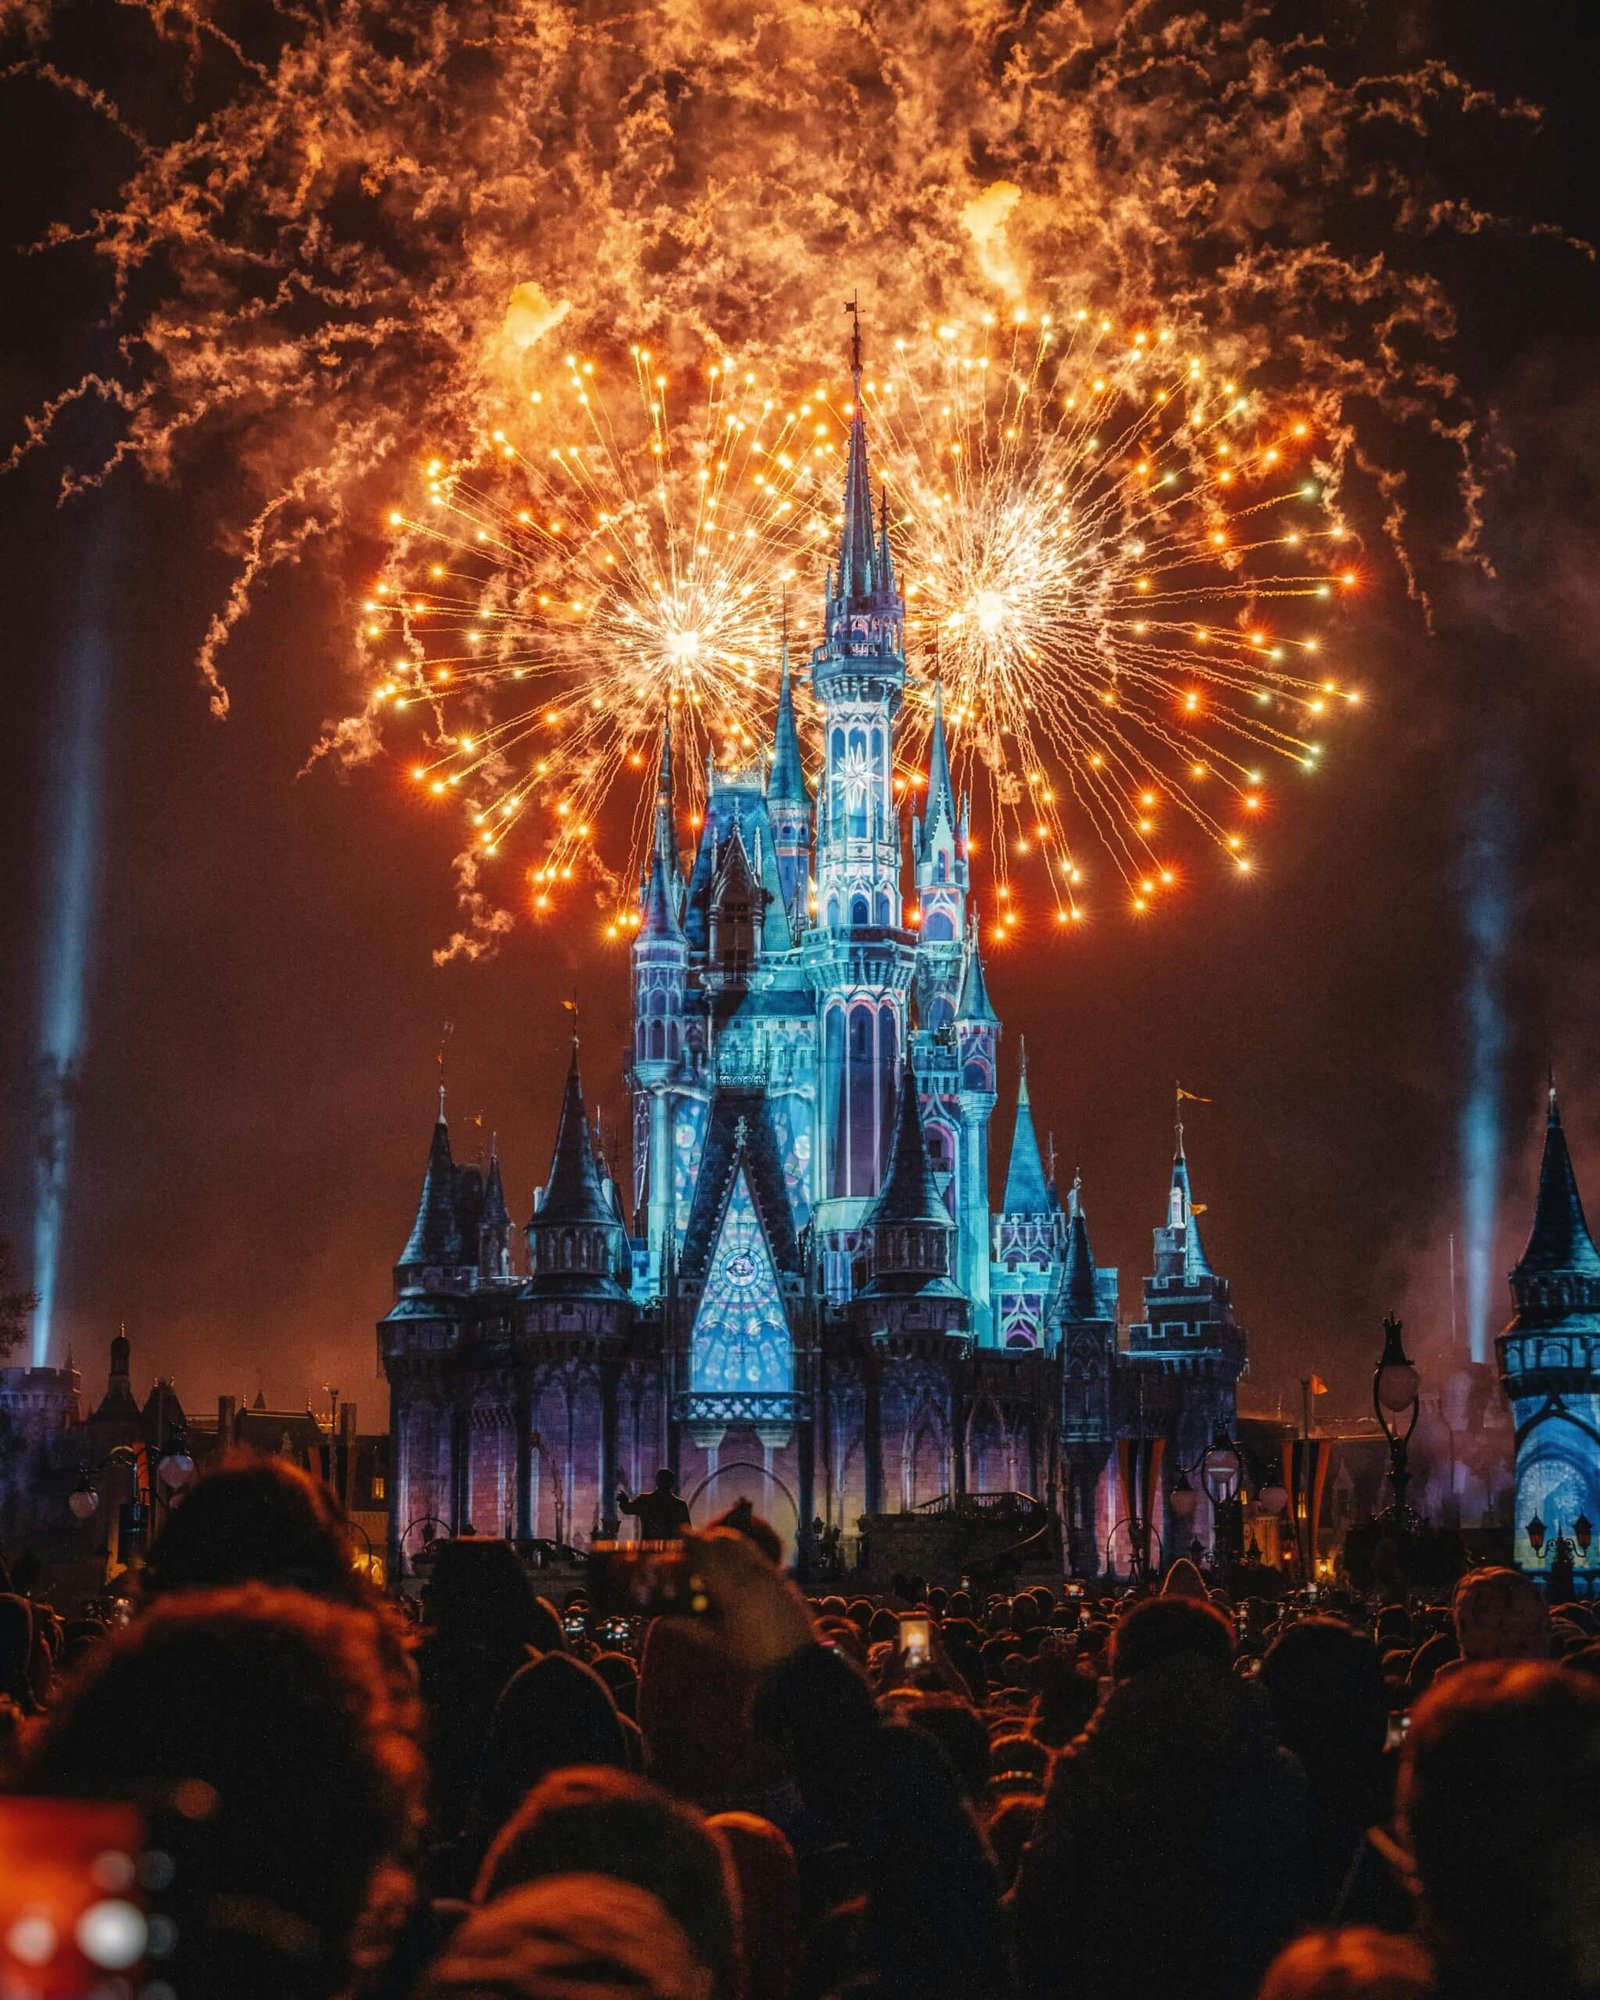 Tokyo Disney land is opening its "Fantasy Springs"!- Japanchunks